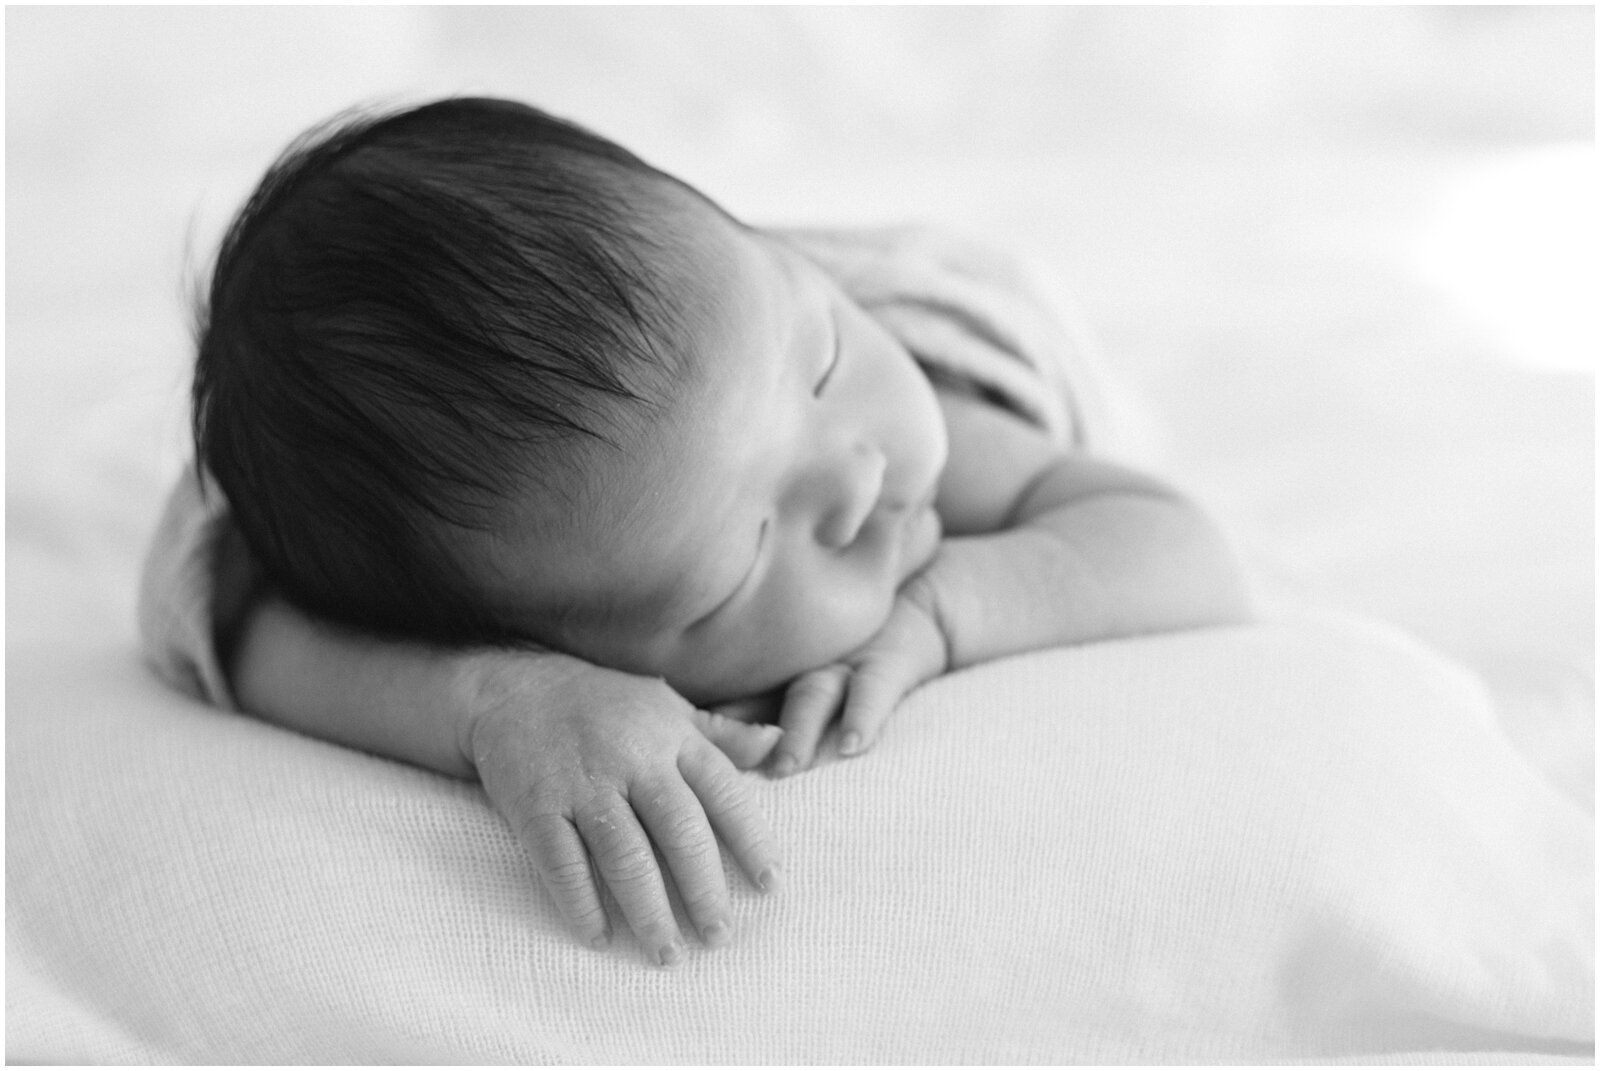  Baby hair. Sleeping newborn baby boy. NKB Photo, New Jersey.  